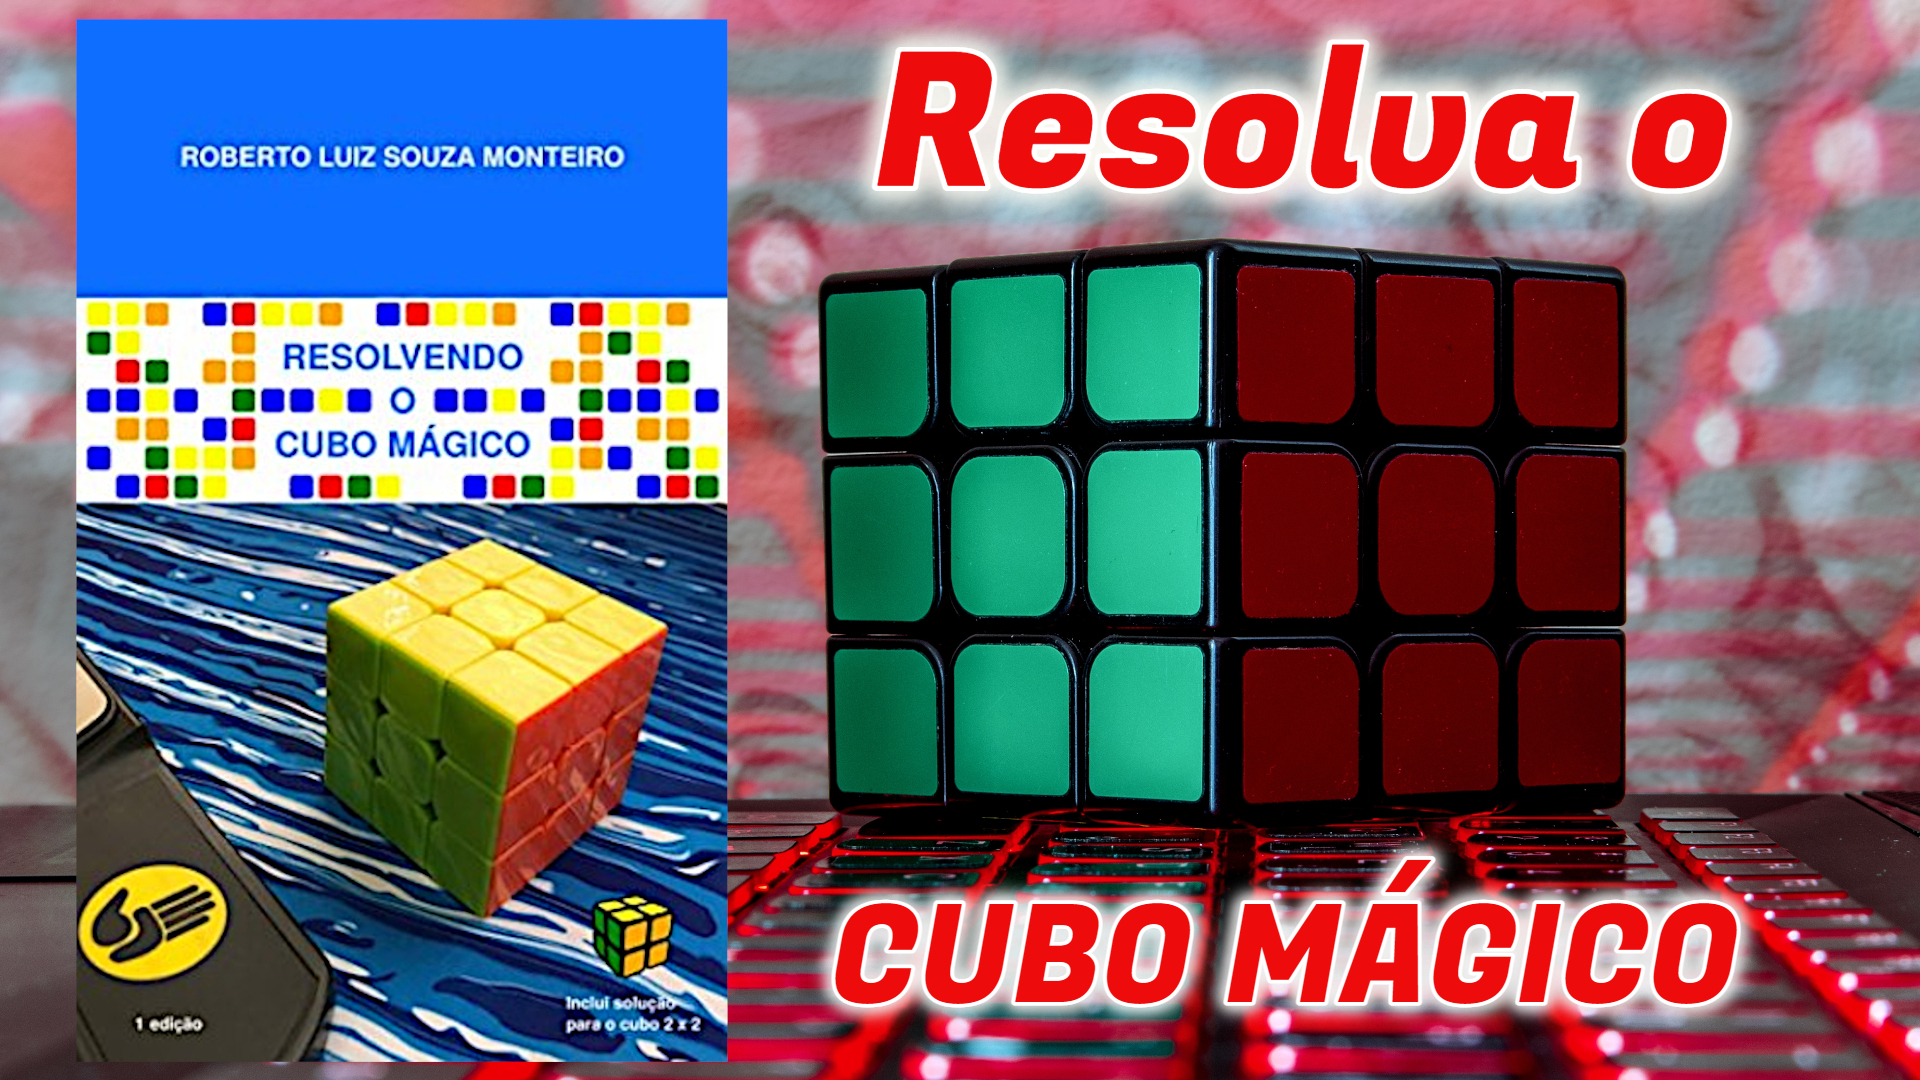 Resolvendo o cubo mágico Roberto Luiz Souza Monteiro Amazon KatiaVegana TriboVegana (2)